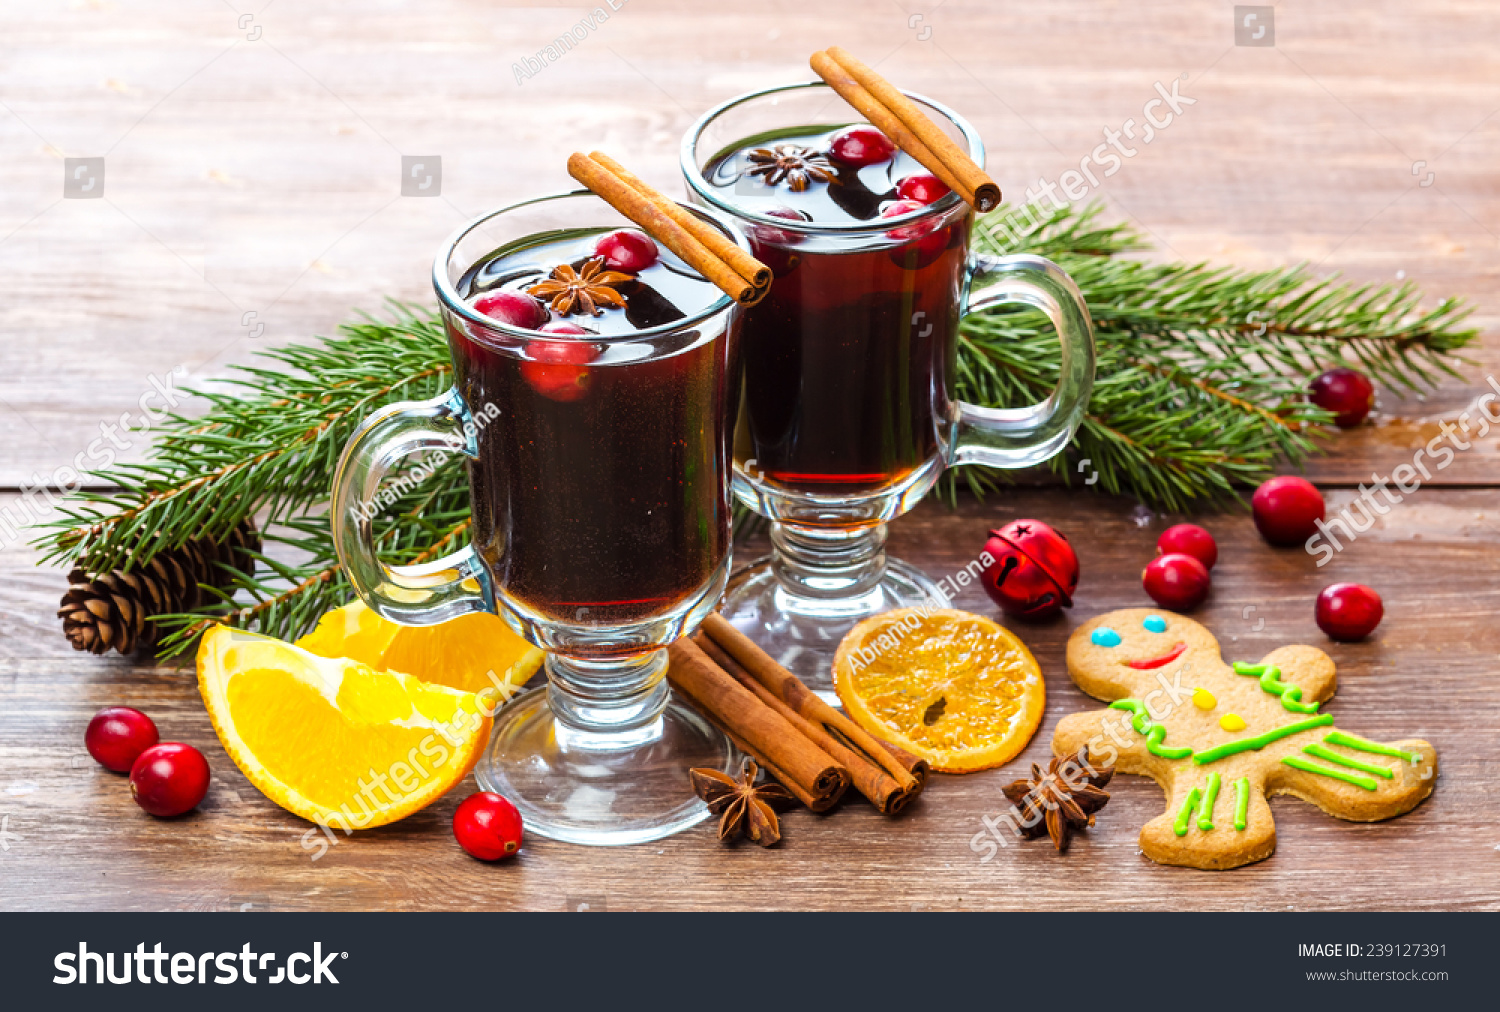 Christmas Gluhwein Stock Photo 239127391 - Shutterstock